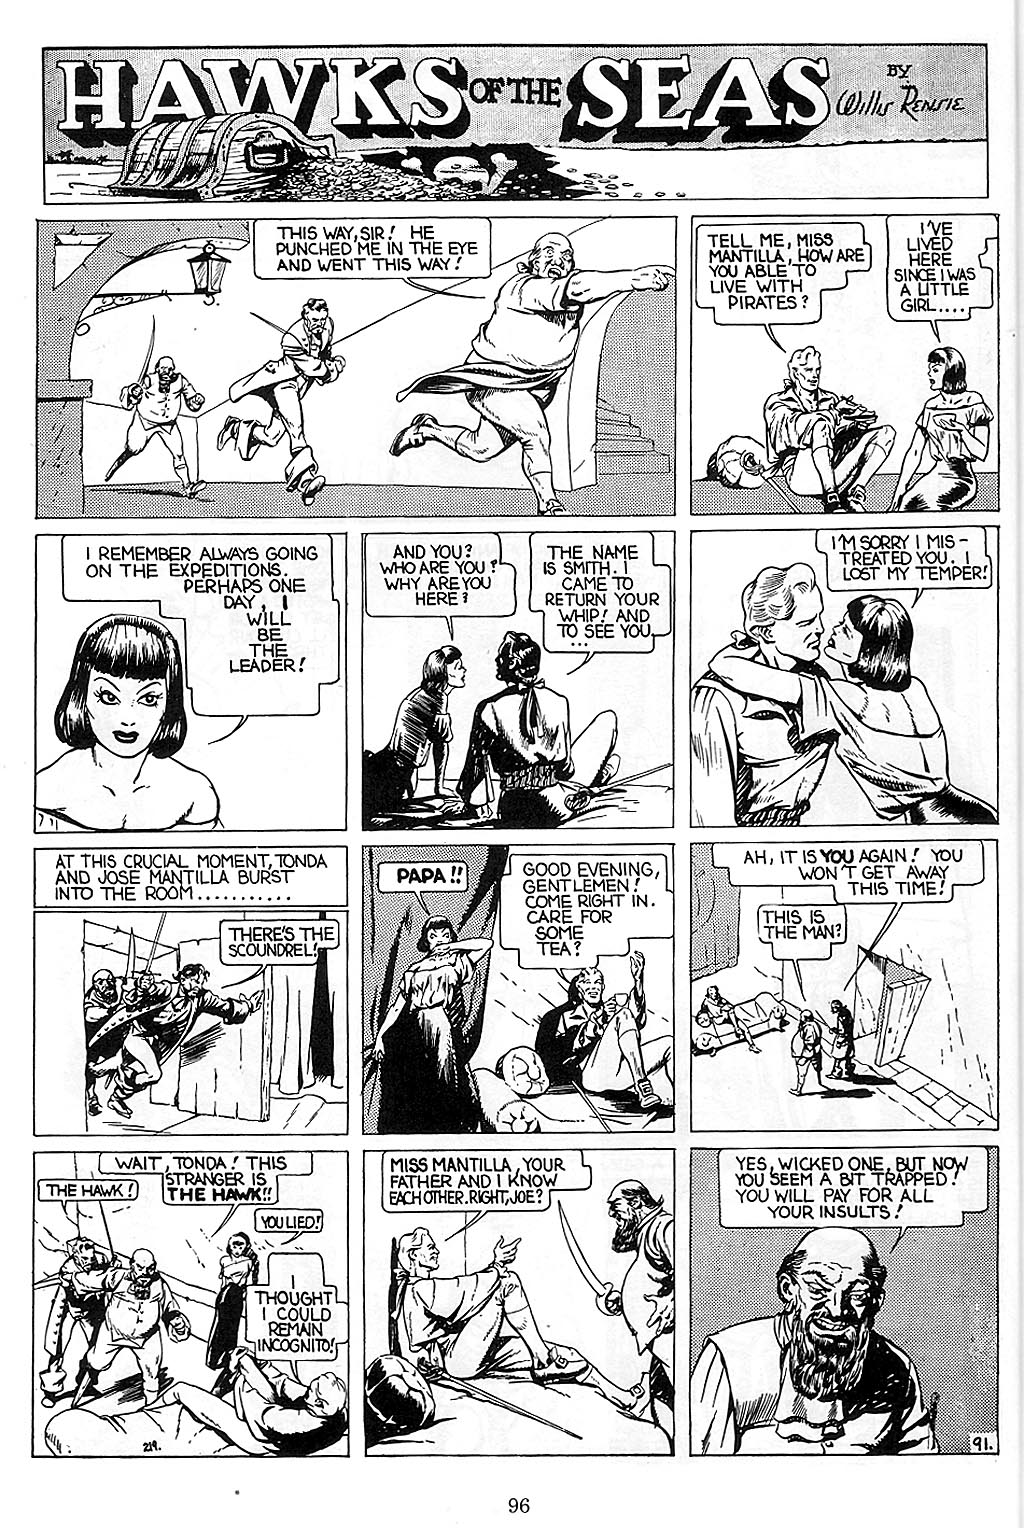 Read online Will Eisner's Hawks of the Seas comic -  Issue # TPB - 97